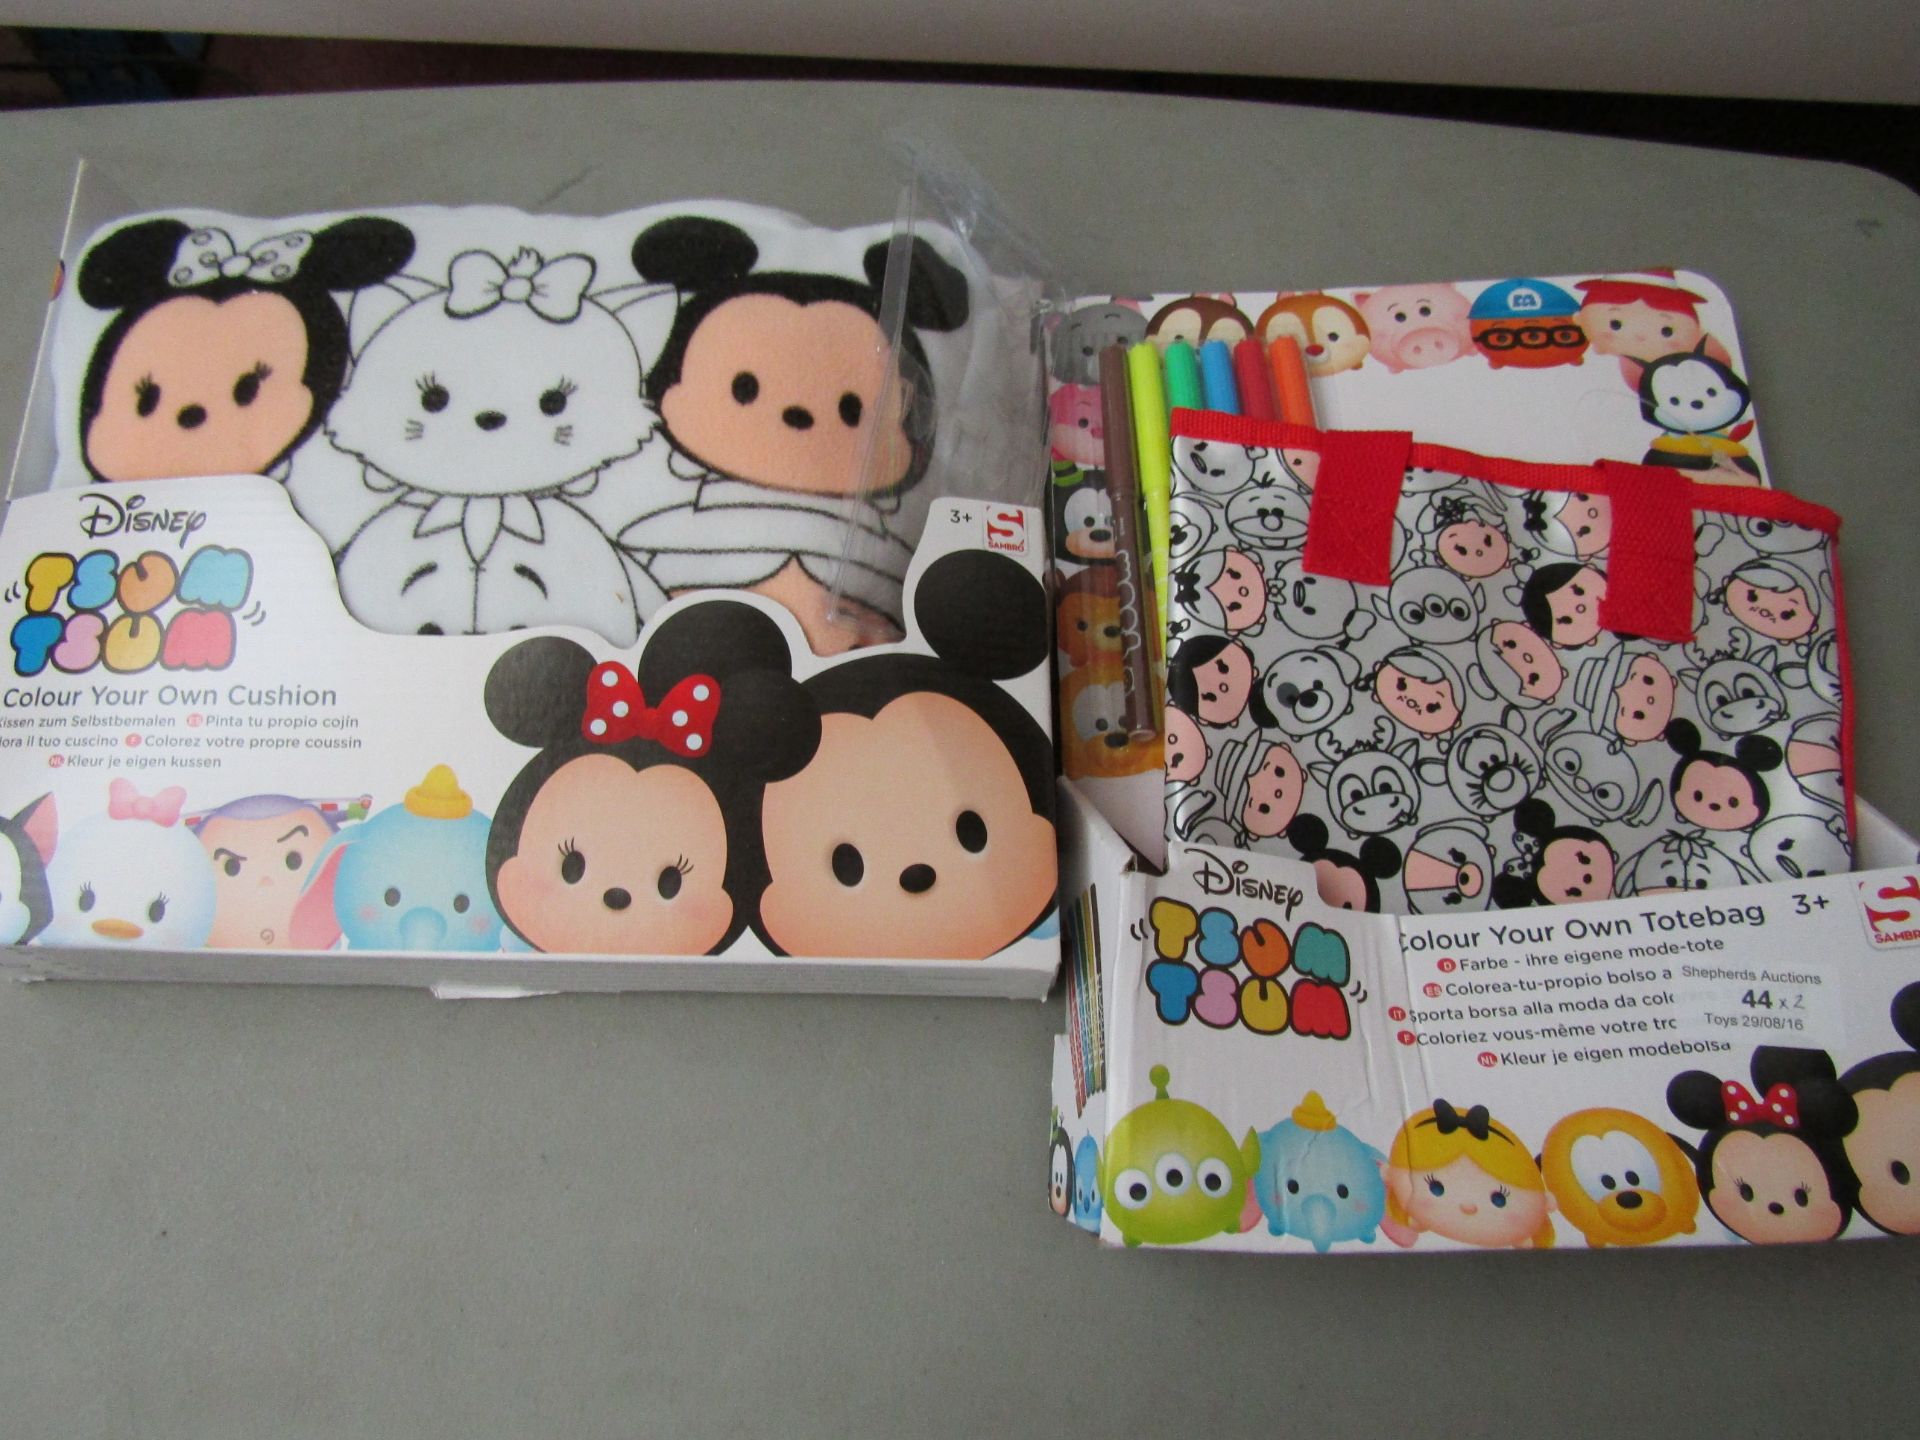 2x Disney Tsum Tsum items being; Tsum Tsum colour you own totebag, new and boxed Tsum Tsum colour